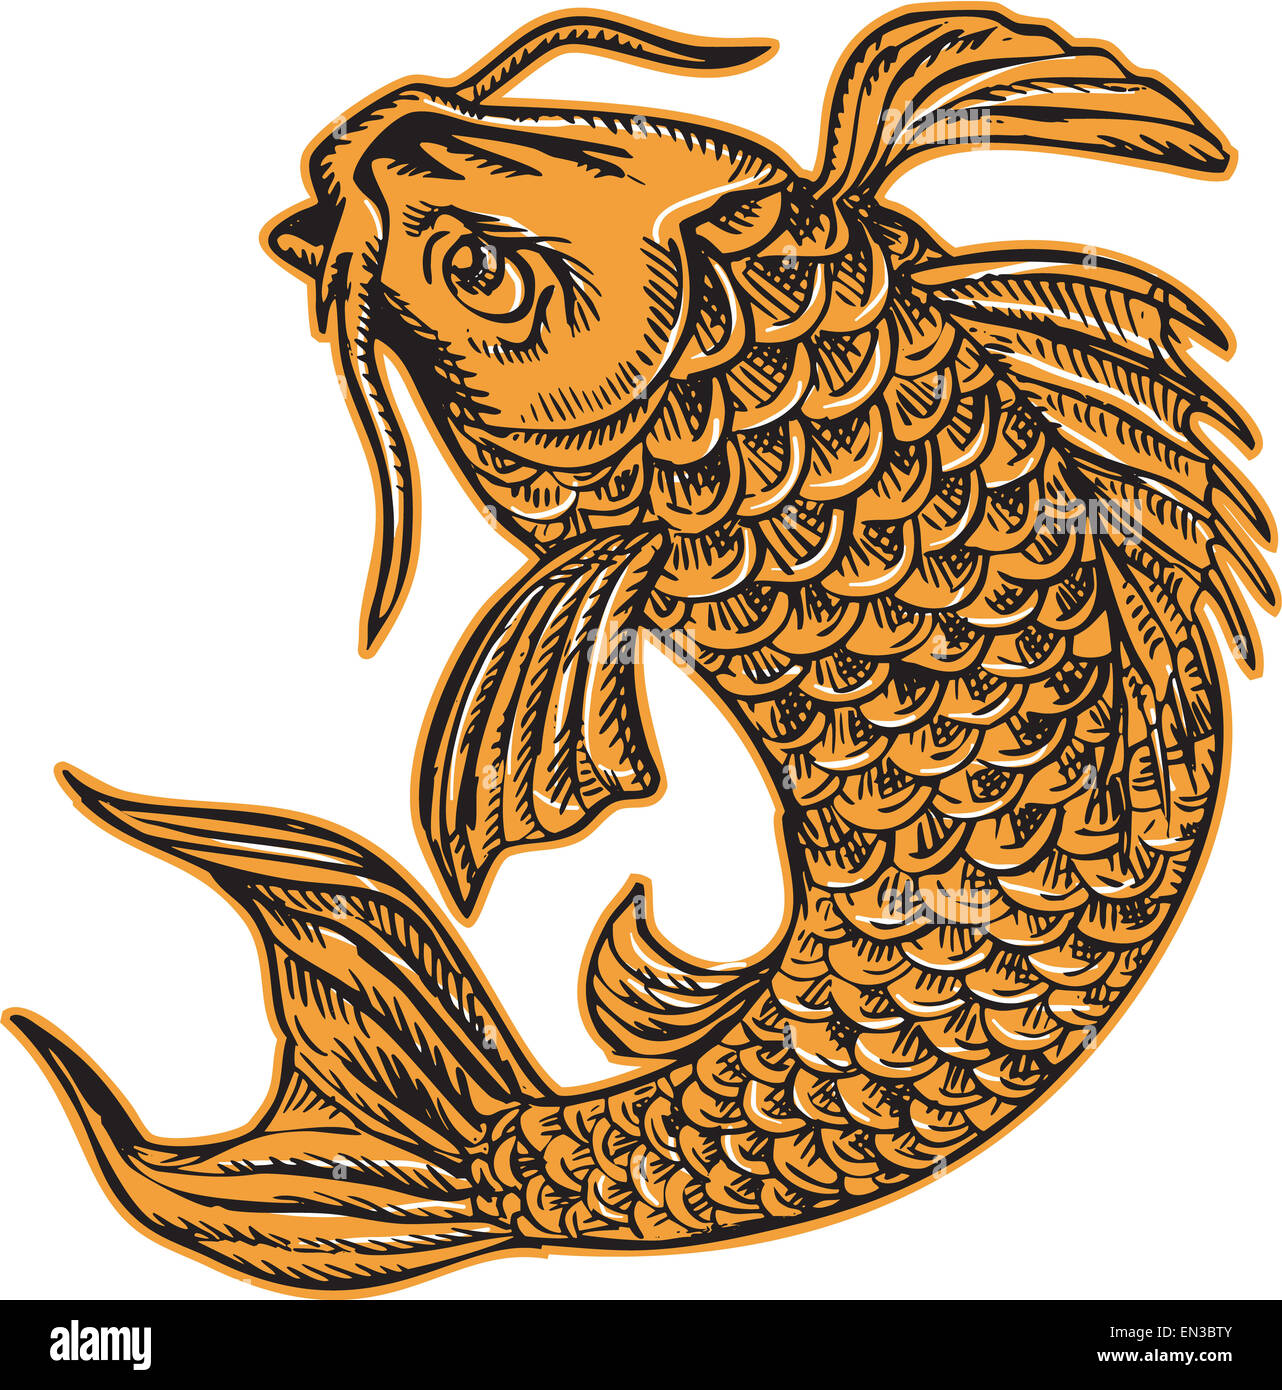 Etching engraving handmade style illustration of a koi carp nishikigoi fish jumping viewed from side set on isolated background. Stock Photo